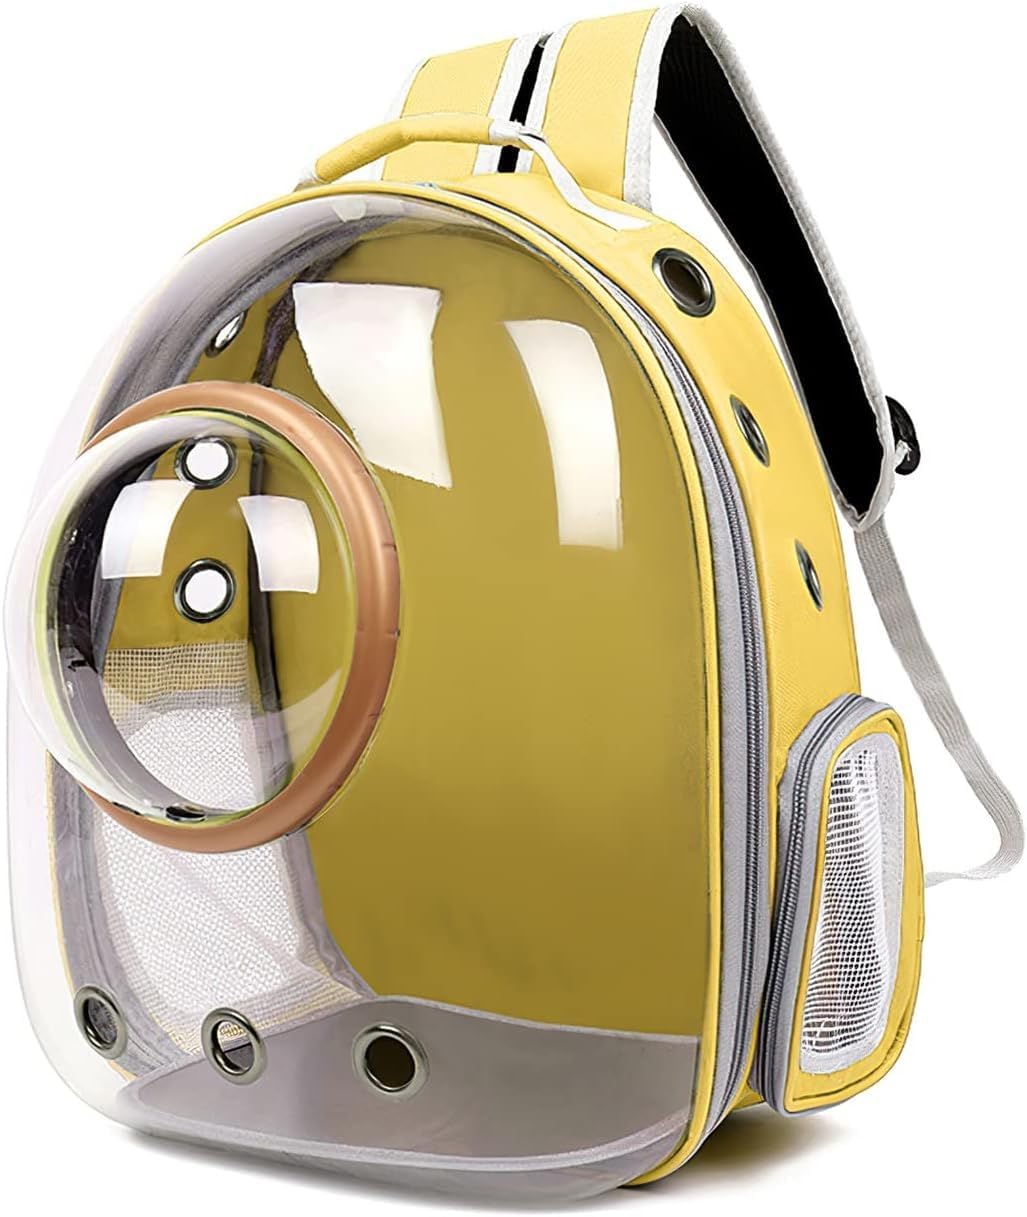 Petstranaut Bobble Backpack Yellow